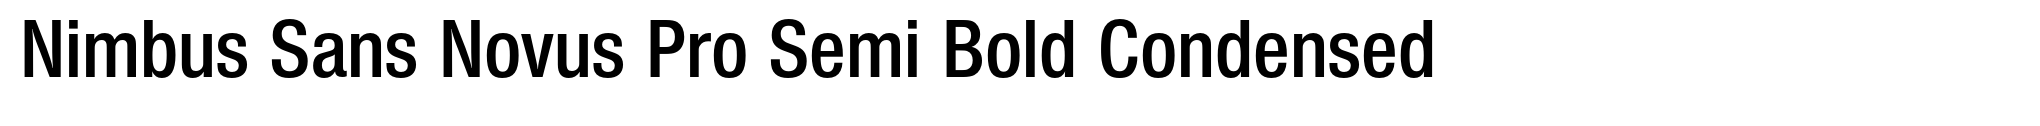 Nimbus Sans Novus Pro Semi Bold Condensed image